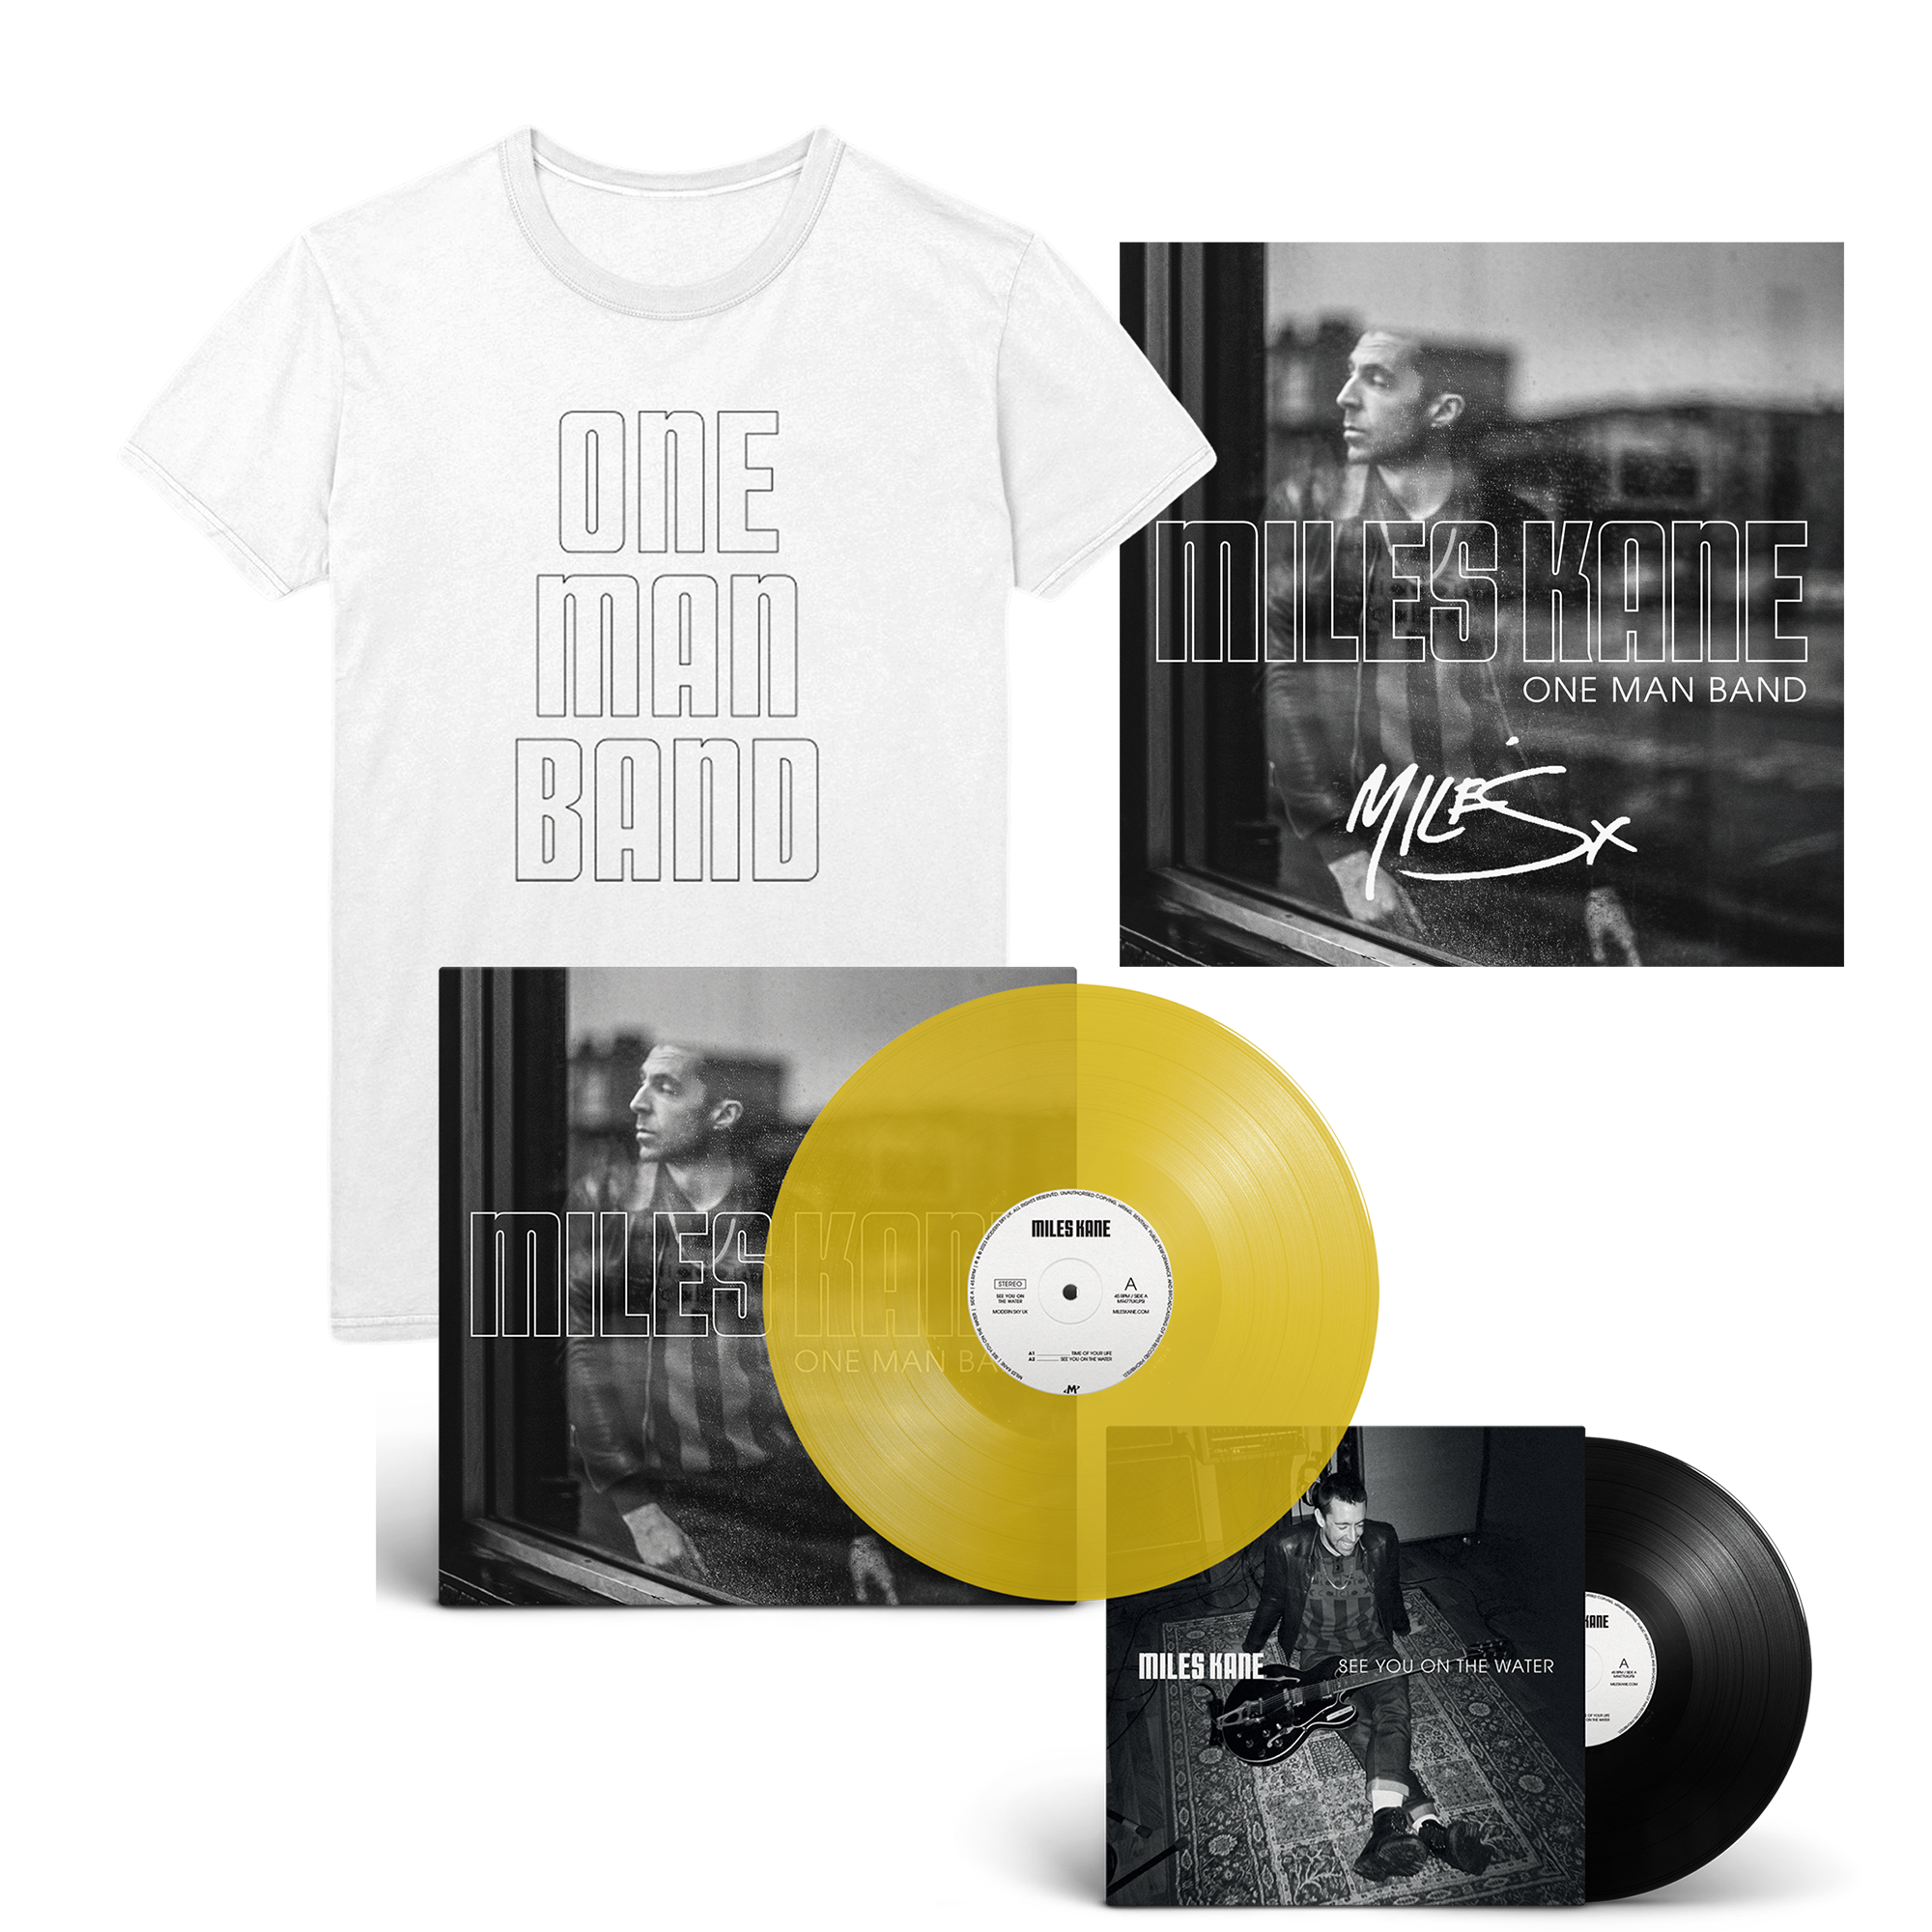 Transparent Yellow LP + 7 inch ‘(EXCLUSIVE BONUS TRACKS) + T-shirt + Signed Print